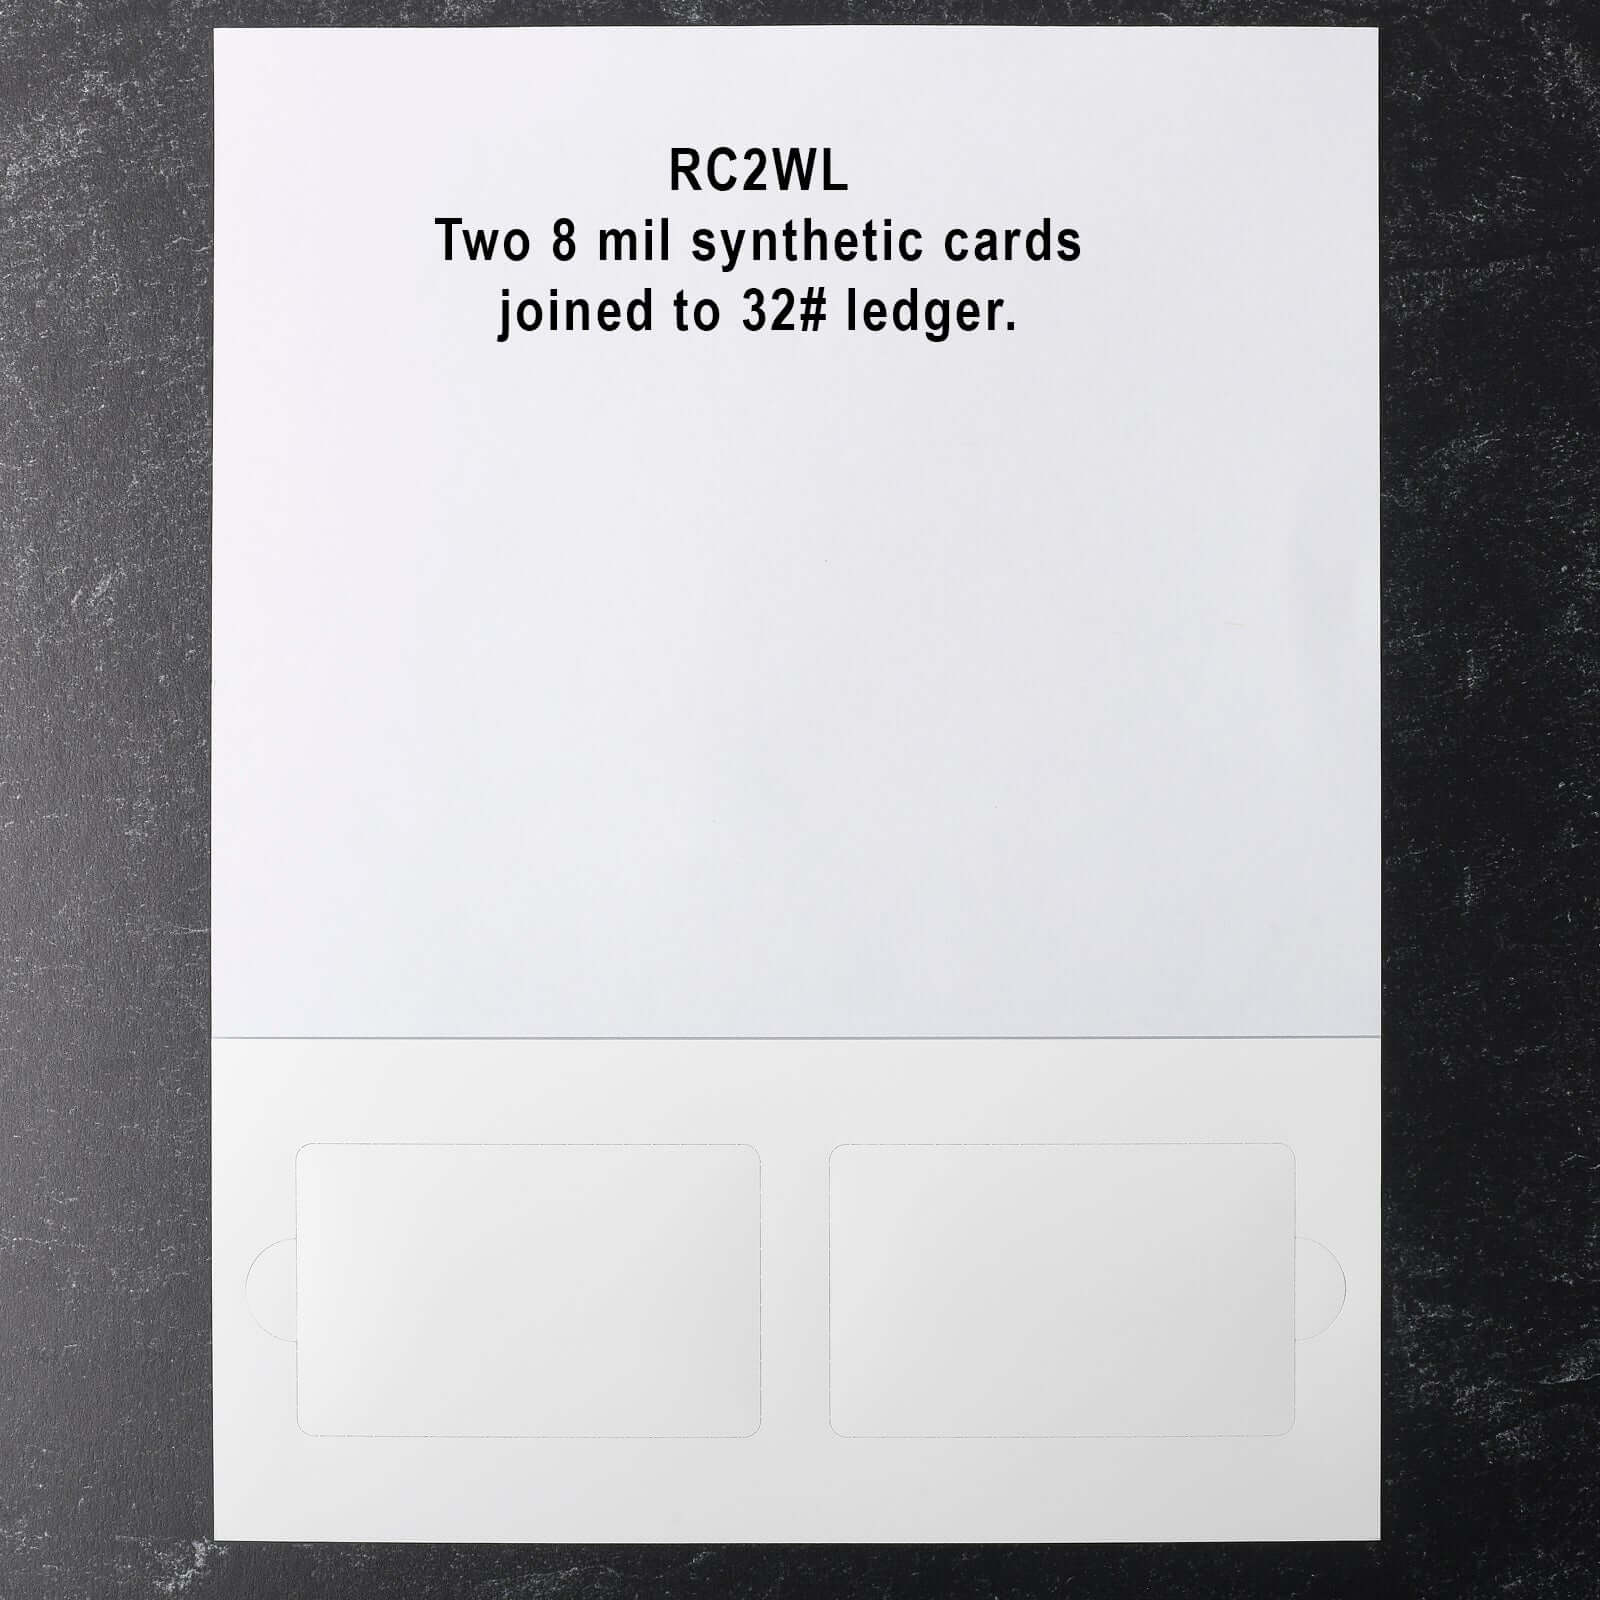 RC2WL RealCard Laser Membership Cards